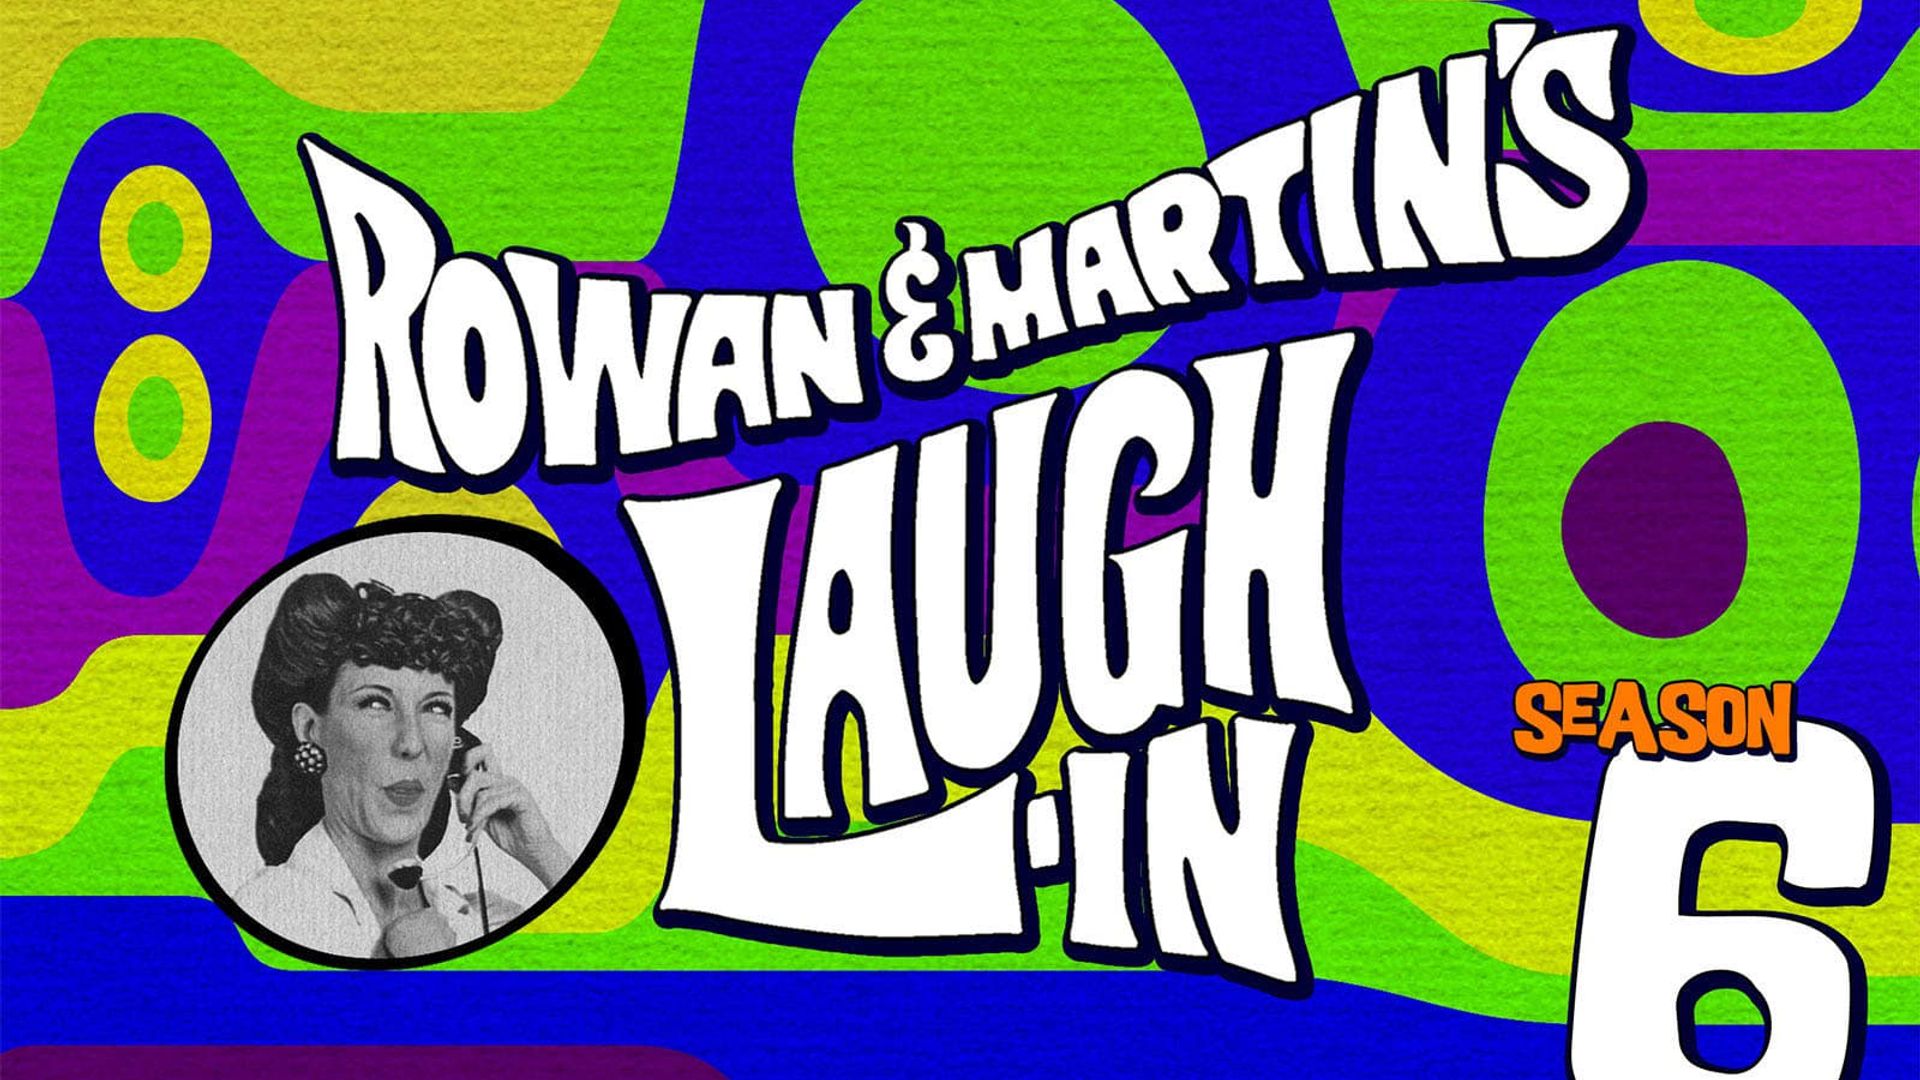 Rowan & Martin's Laugh-In background